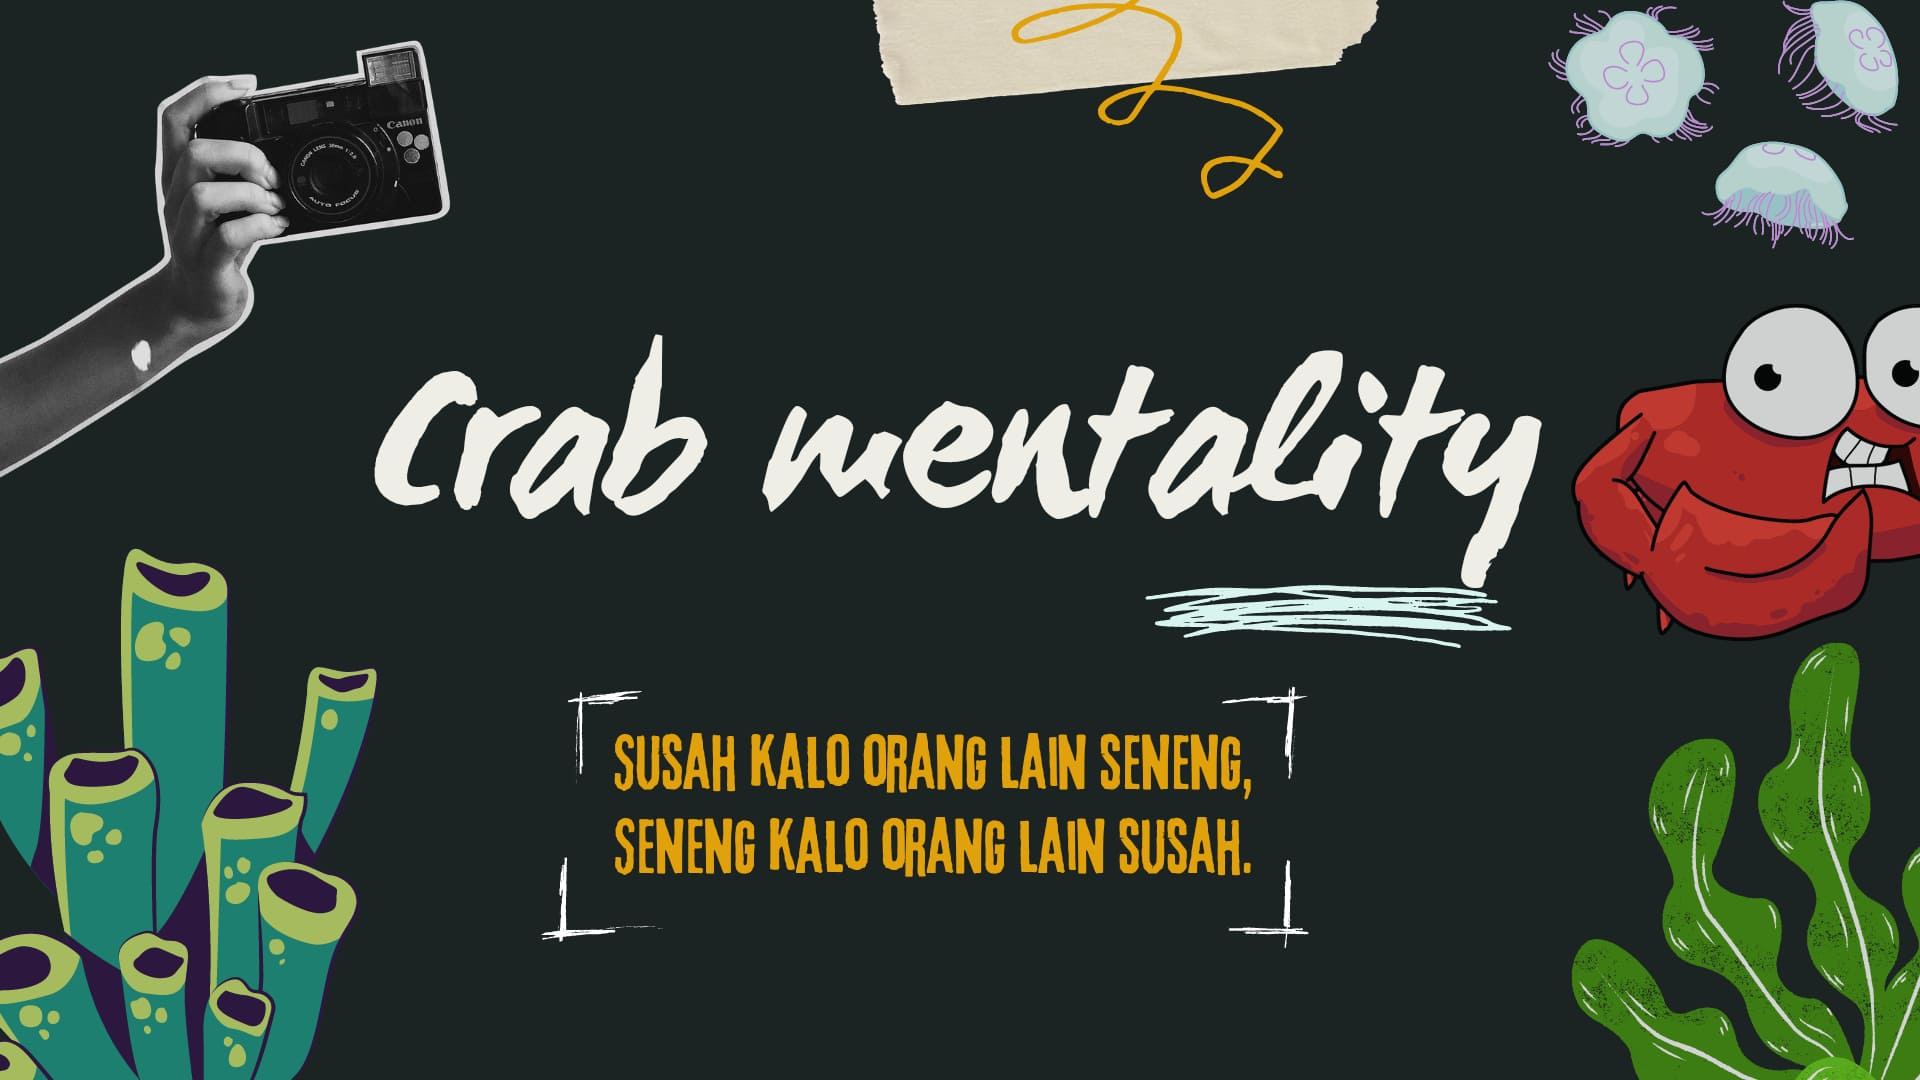 Crab Mentality, Perasaan Iri dengan Orang lain - Duta Damai Yogyakarta